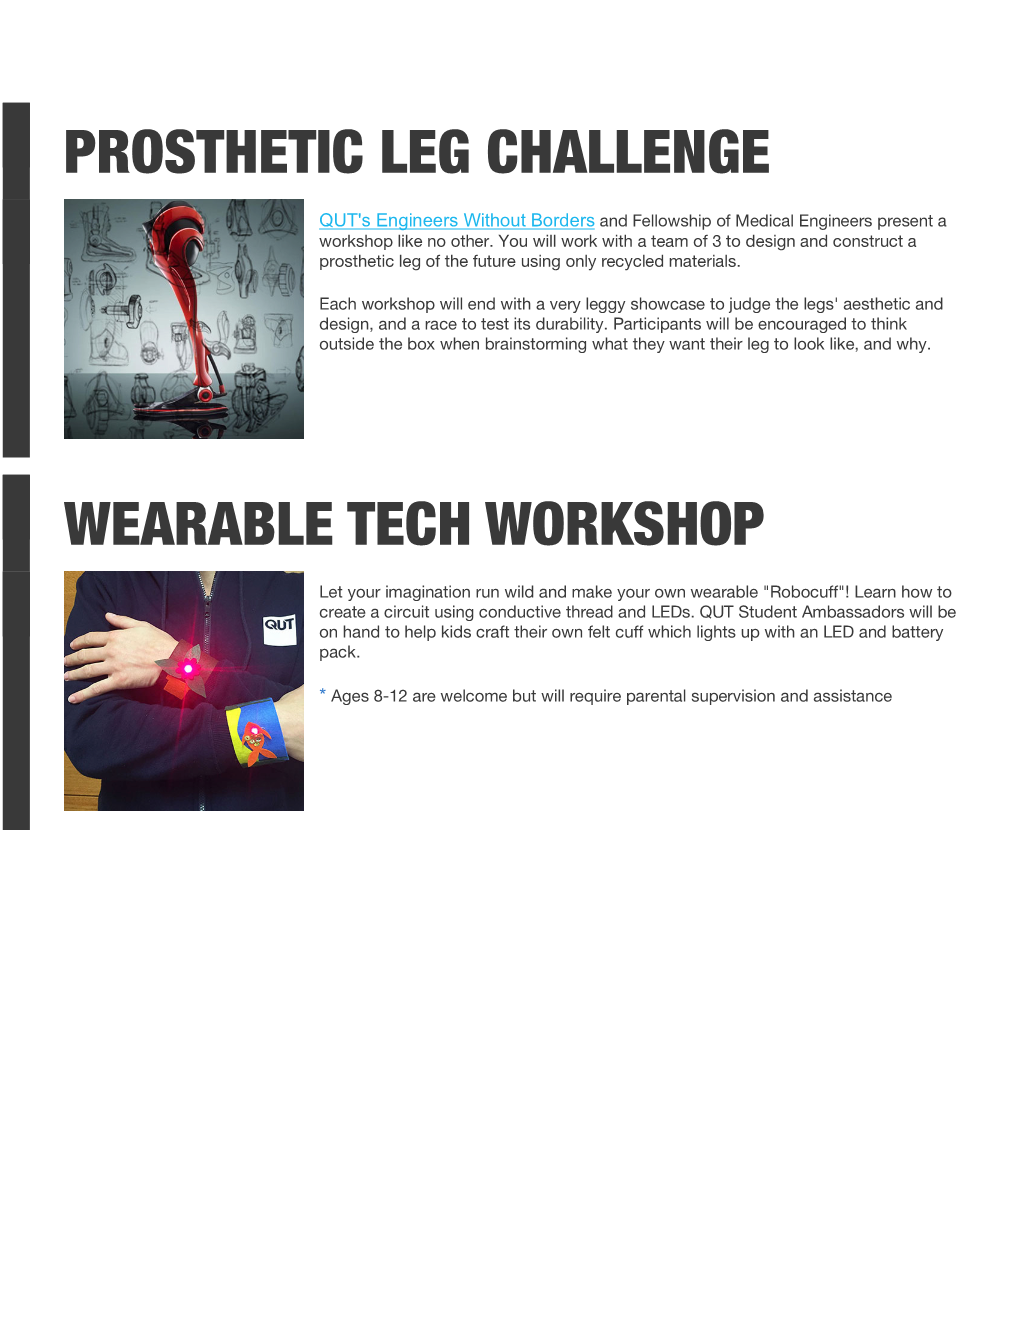 Prosthetic Leg Challenge Wearable Tech Workshop